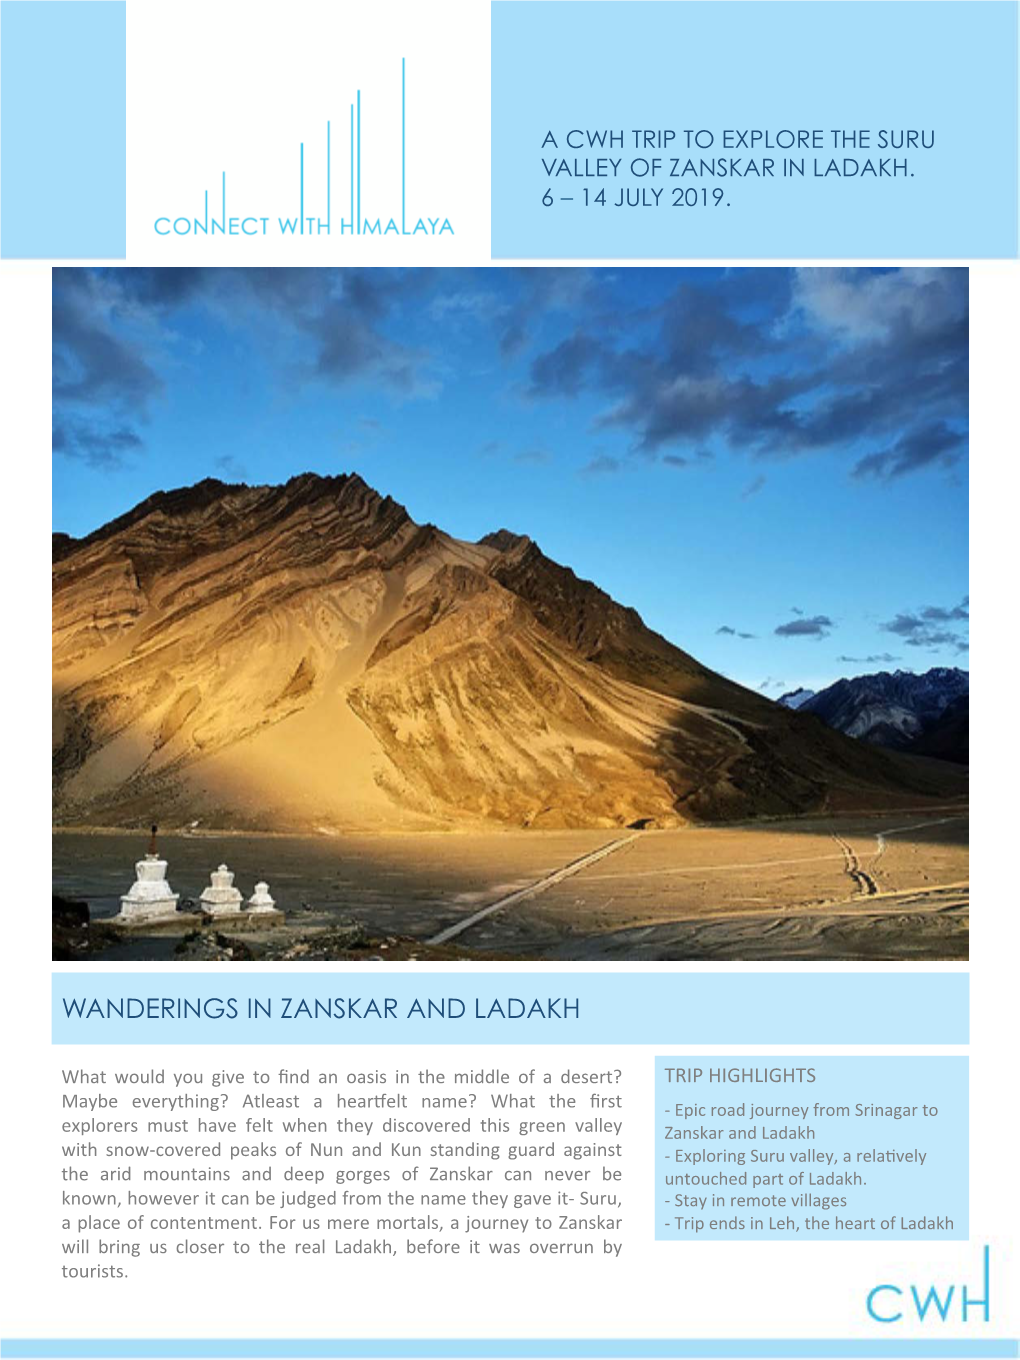 Wanderings in Zanskar and Ladakh